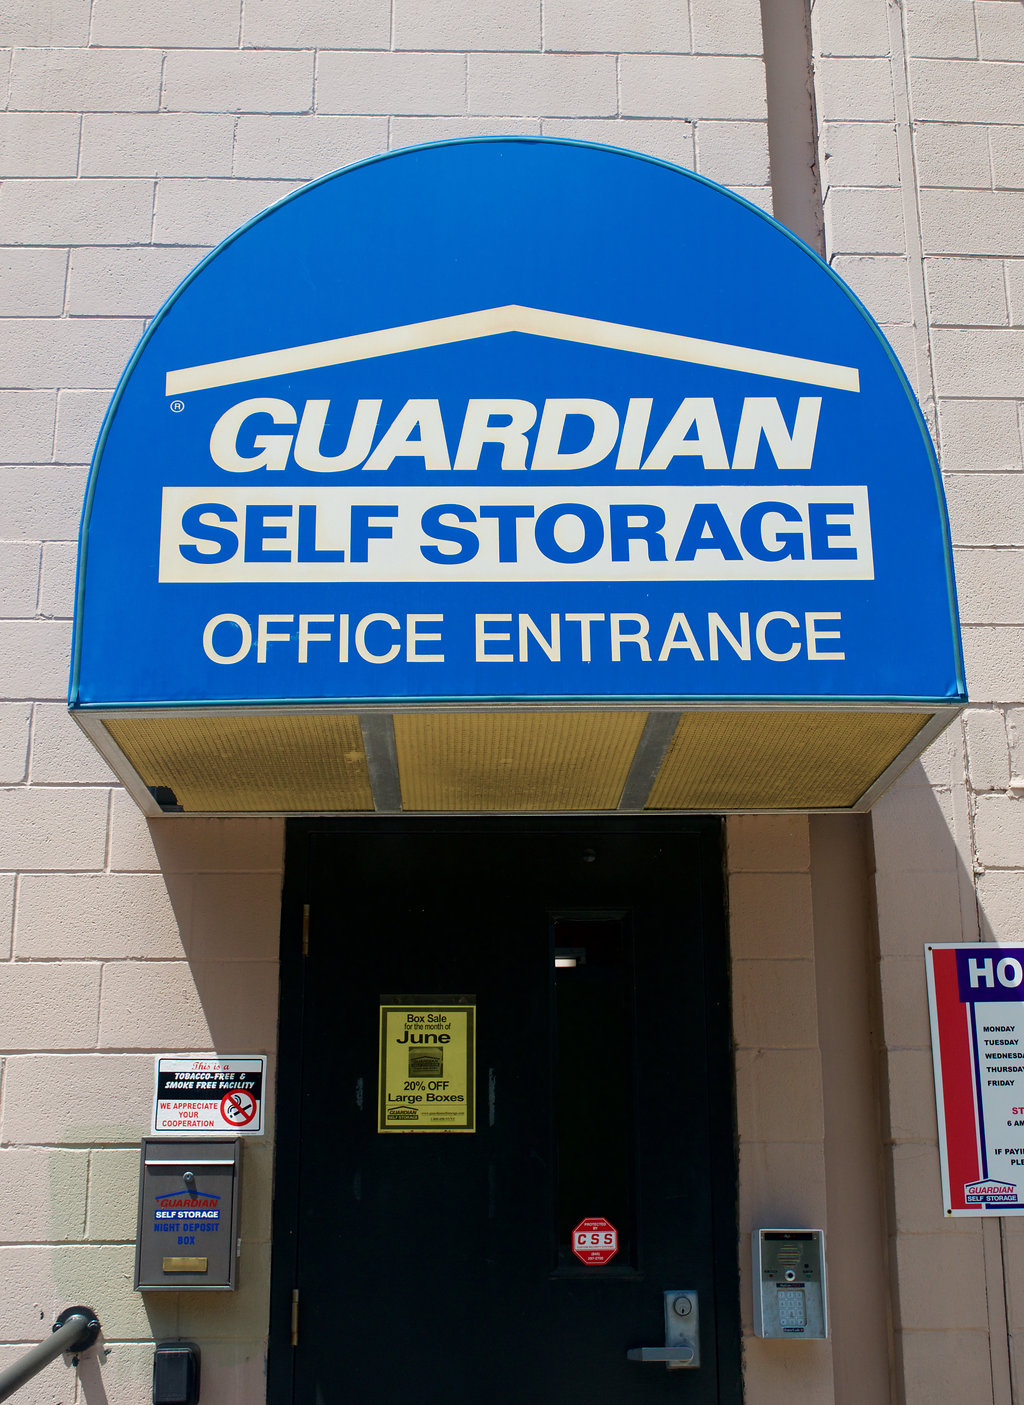 Guardian Self Storage | 3 Neptune Rd, Poughkeepsie, NY 12601 | Phone: (845) 462-8888